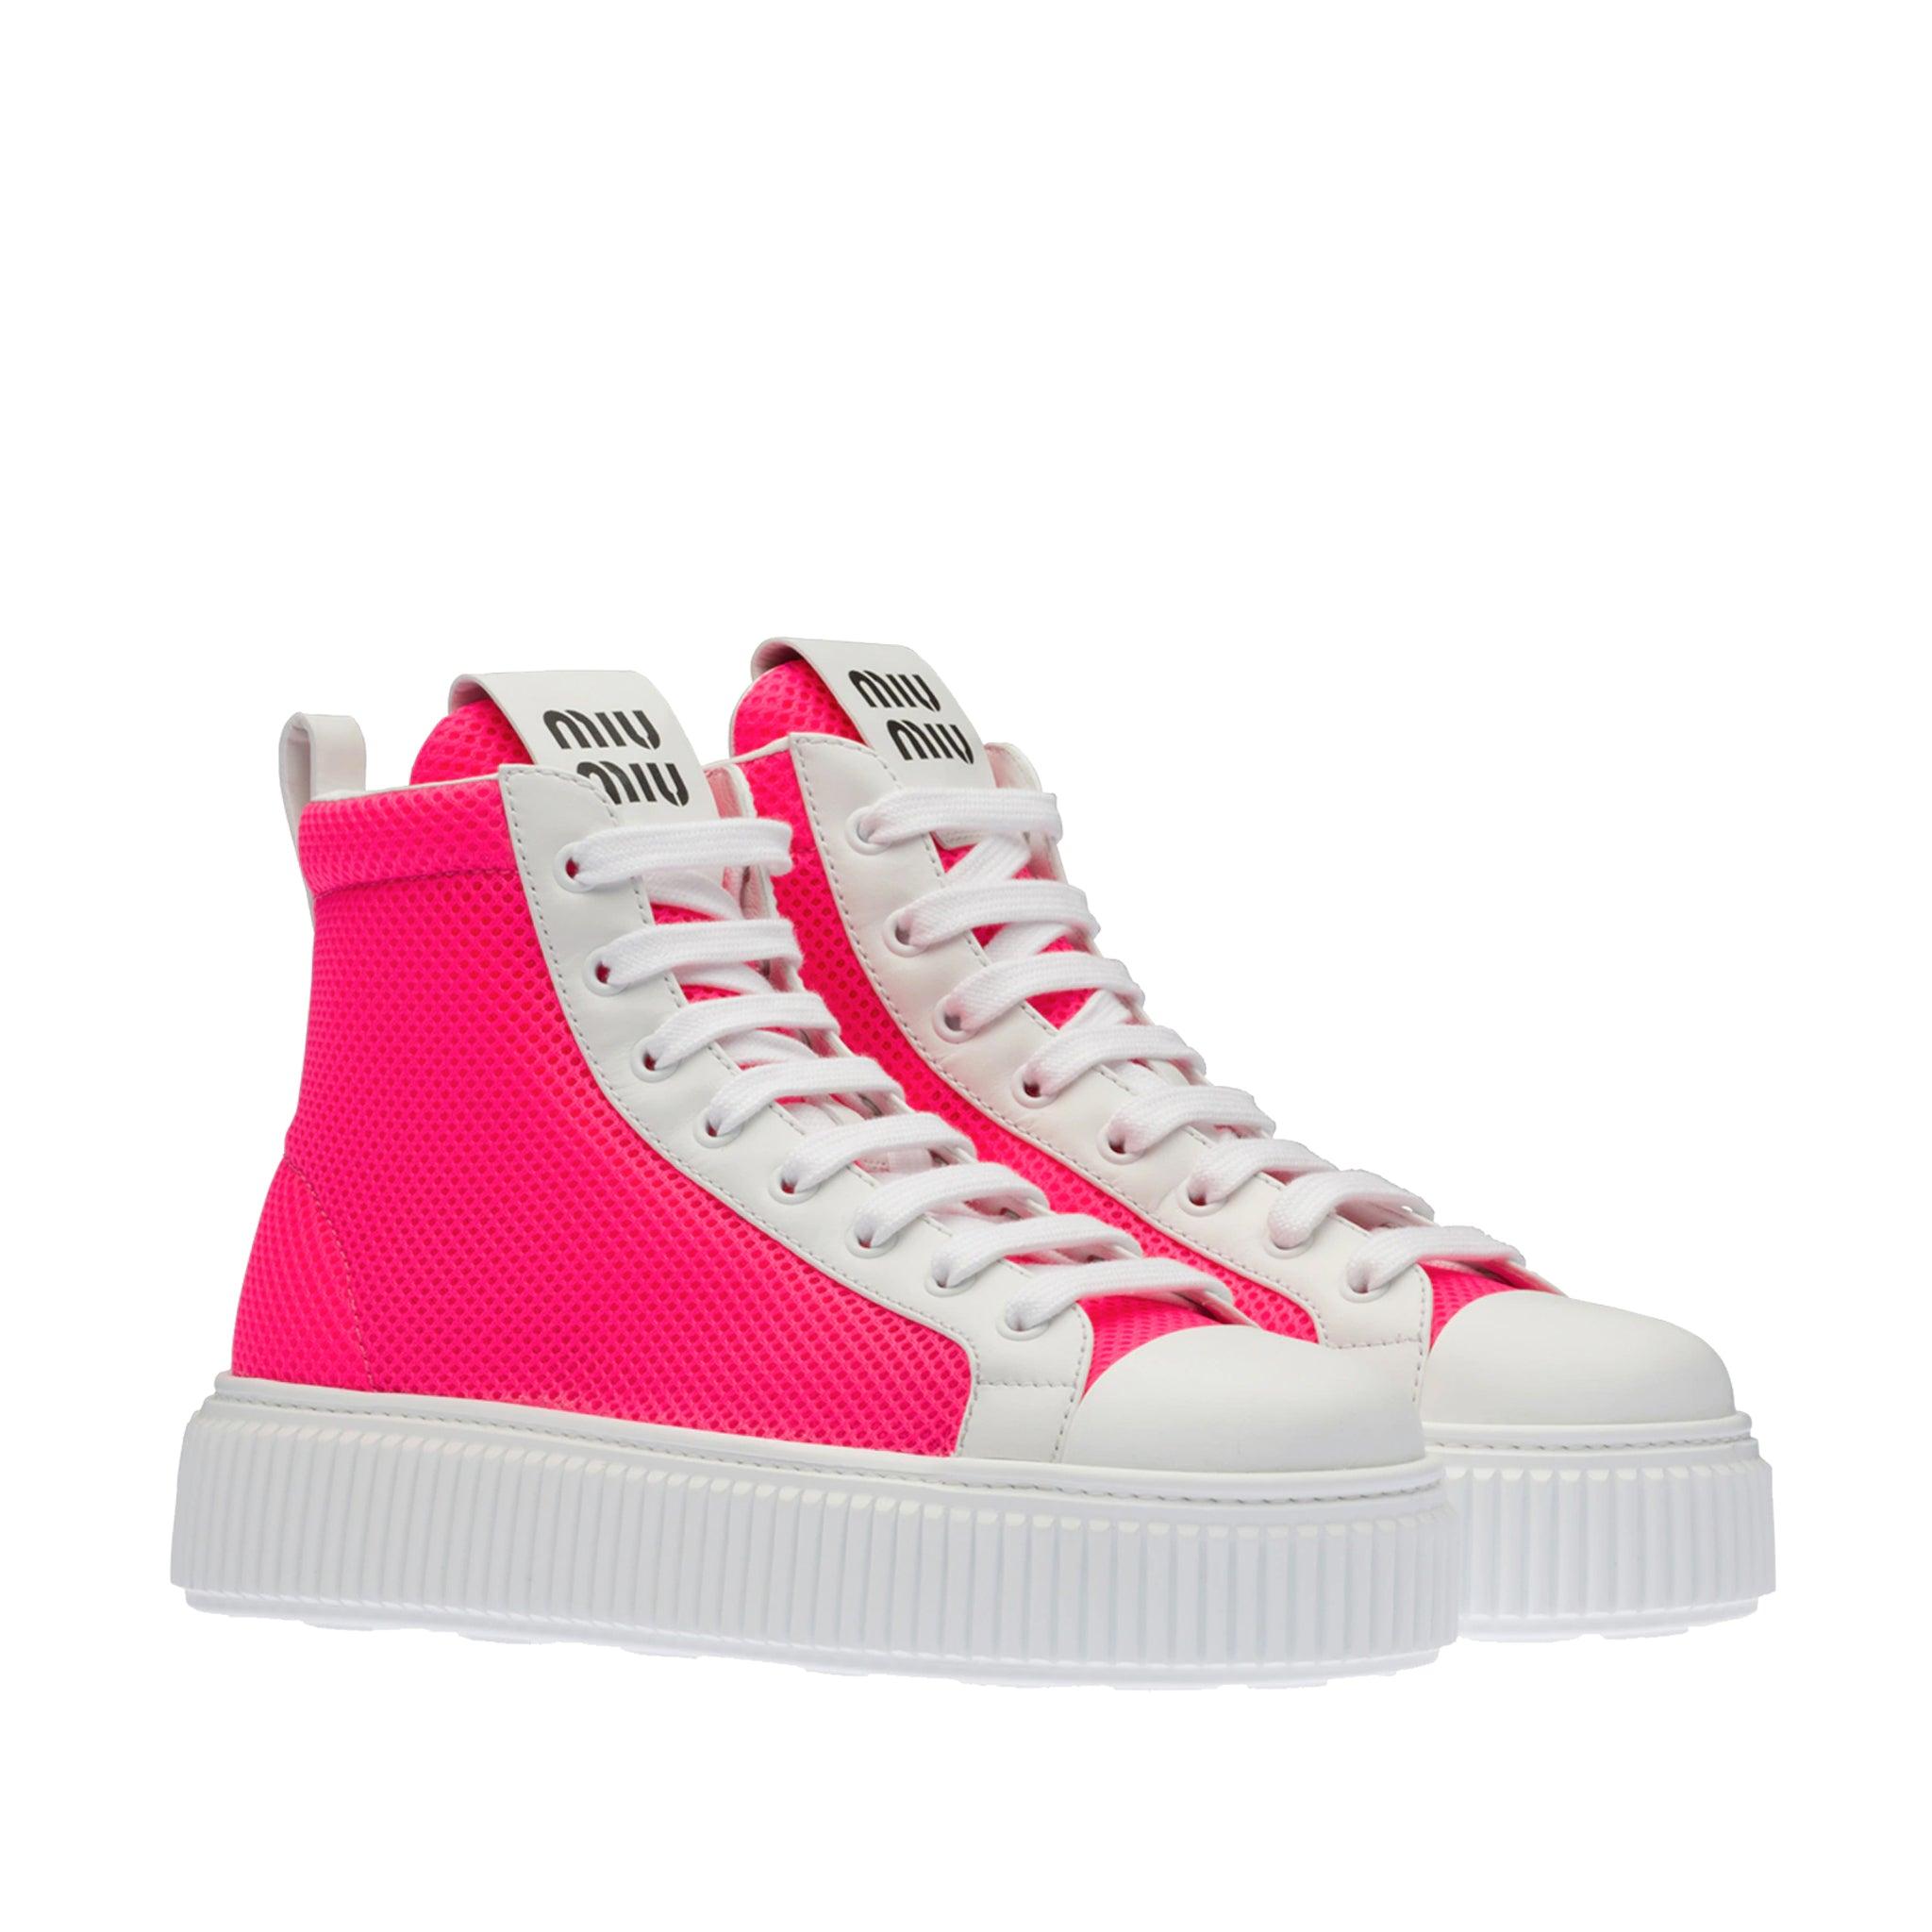 Miu Miu B-ball High-top Sneakers in Pink | Lyst